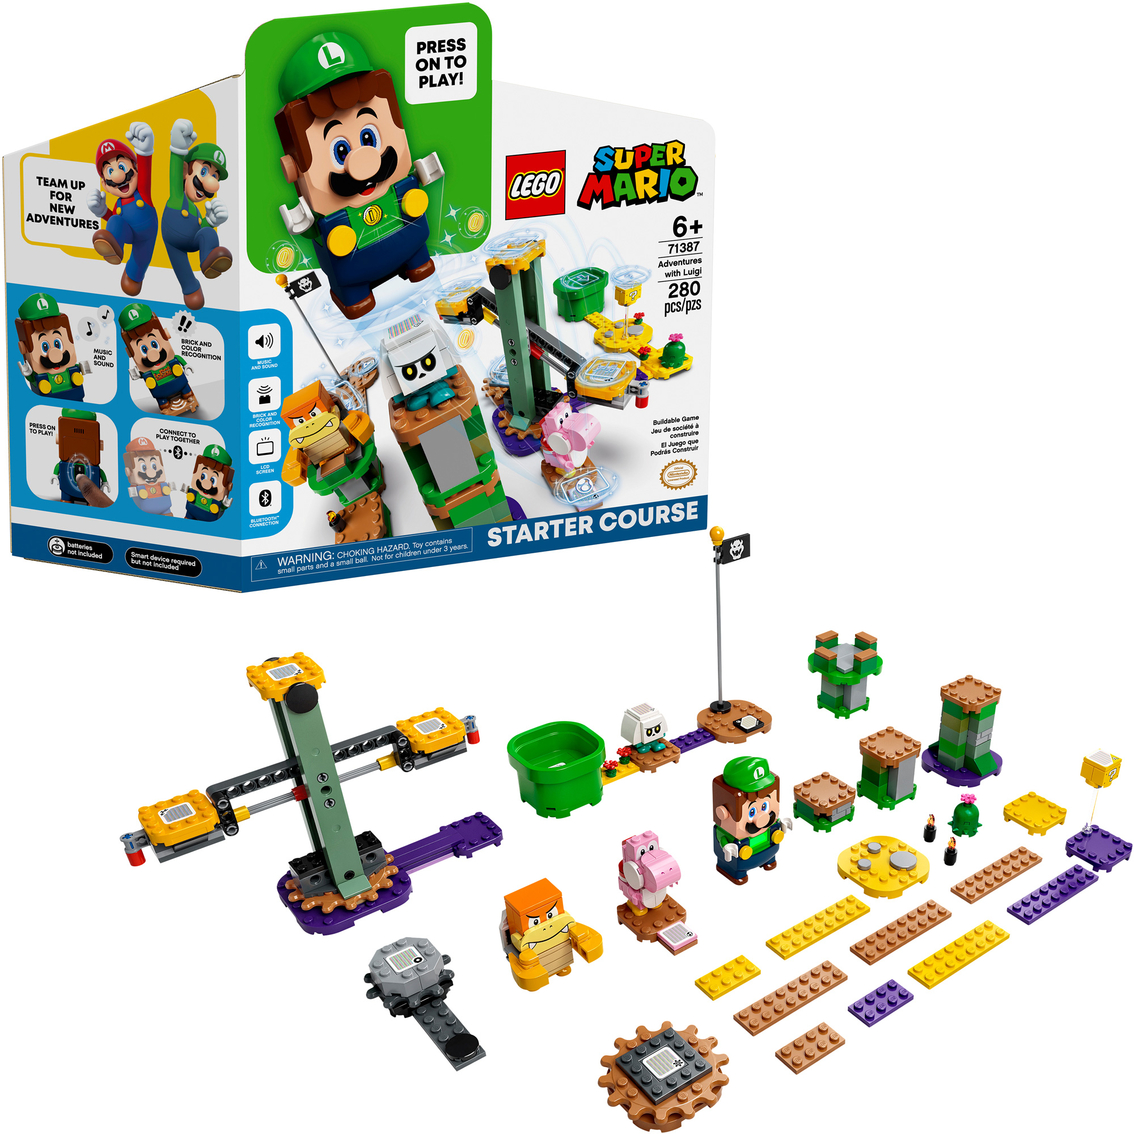 LEGO Super Mario Adventures with Luigi Starter Course Toy 71387 - Image 2 of 3